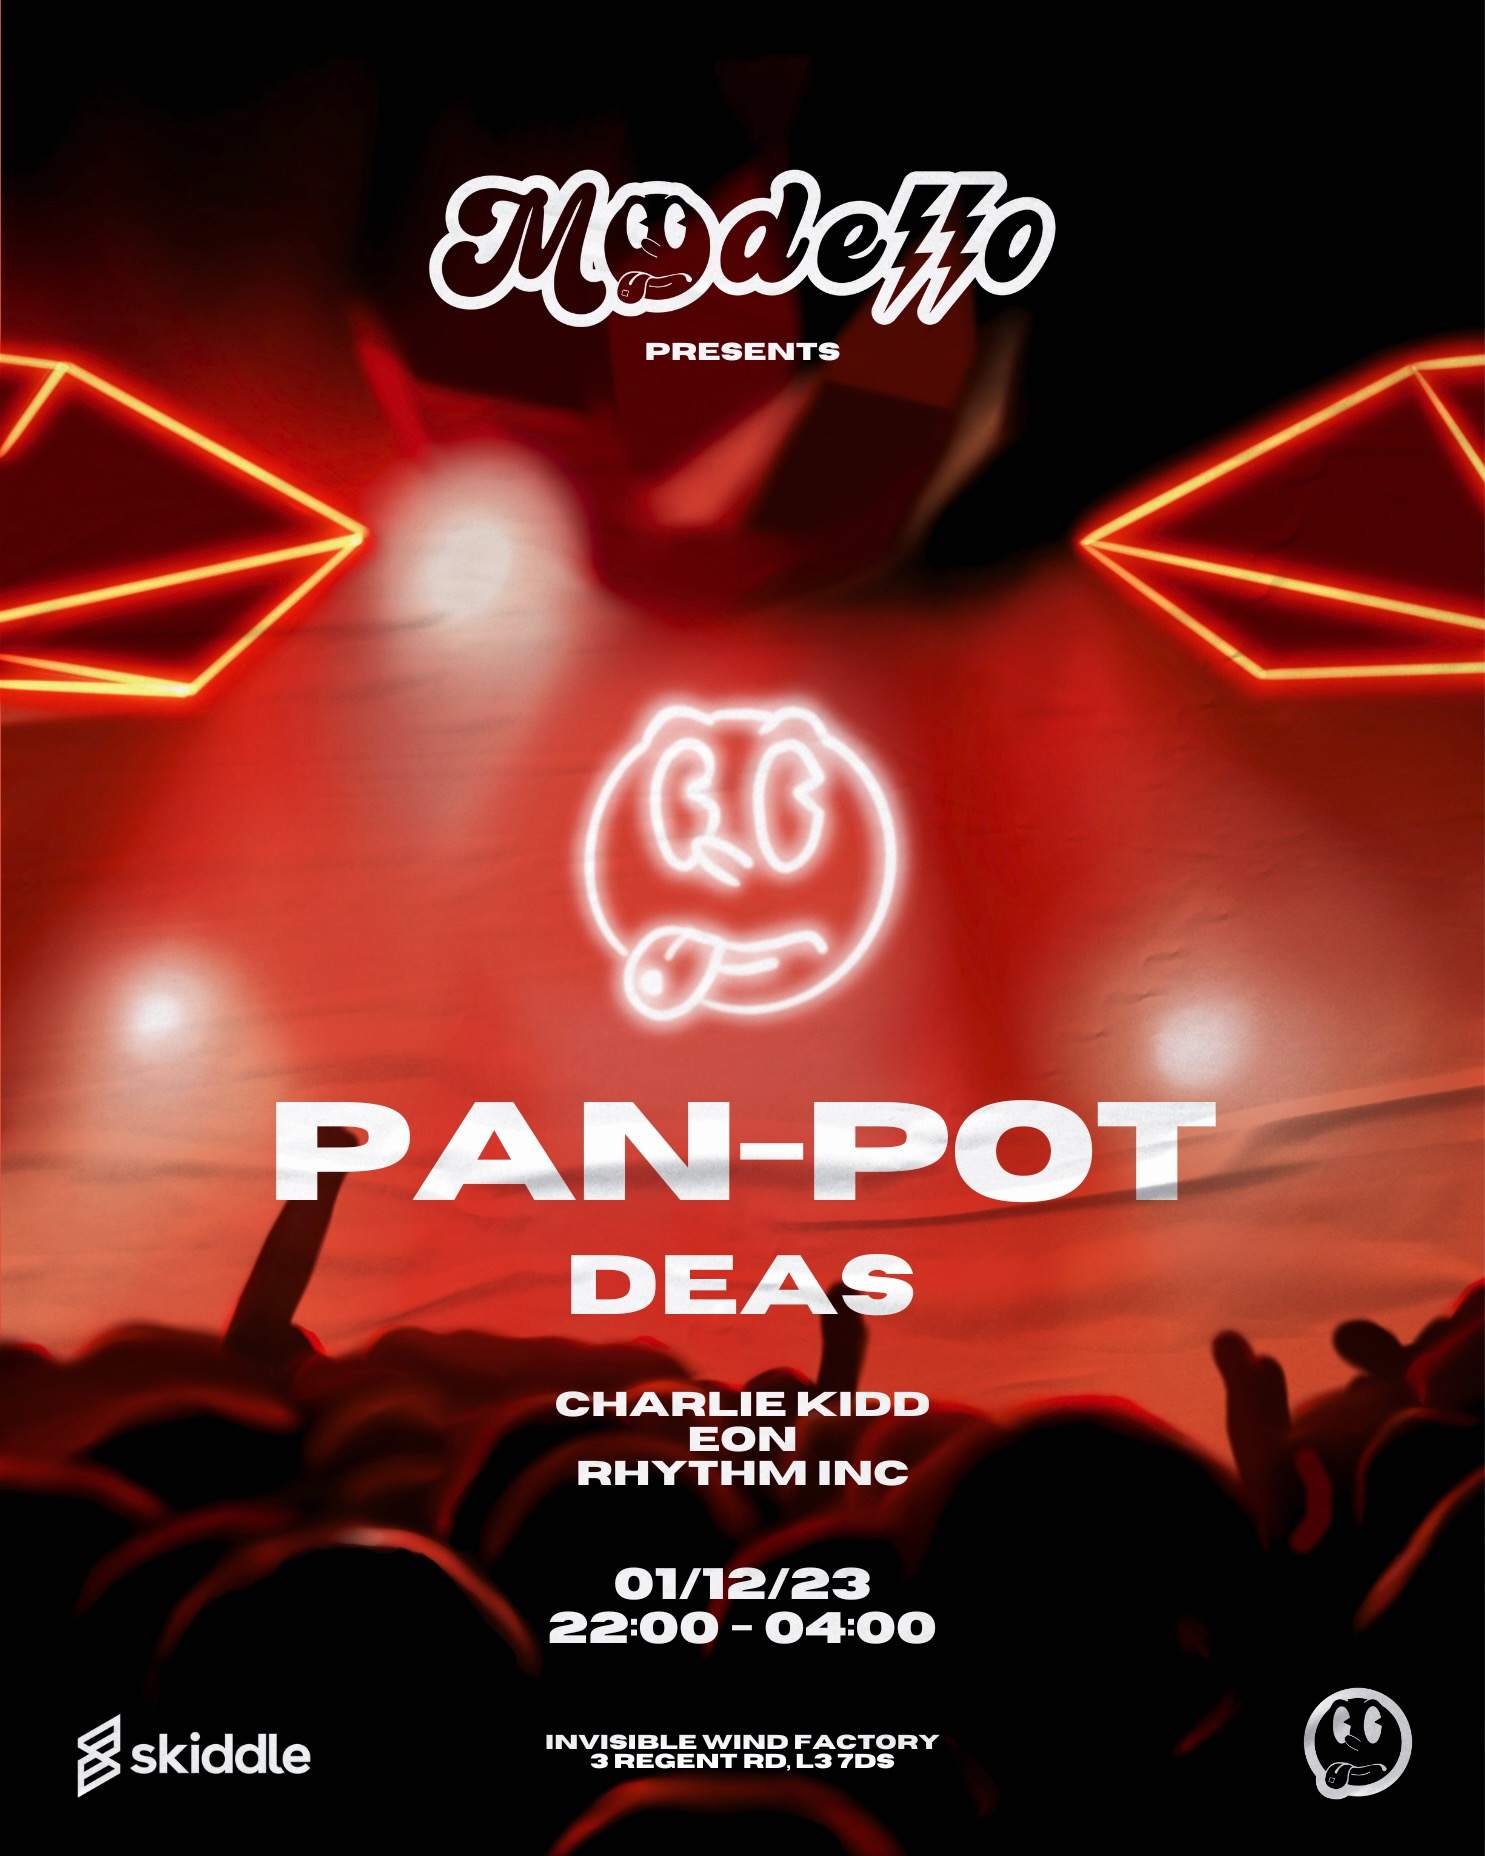 Pan Pot - Modello - フライヤー表